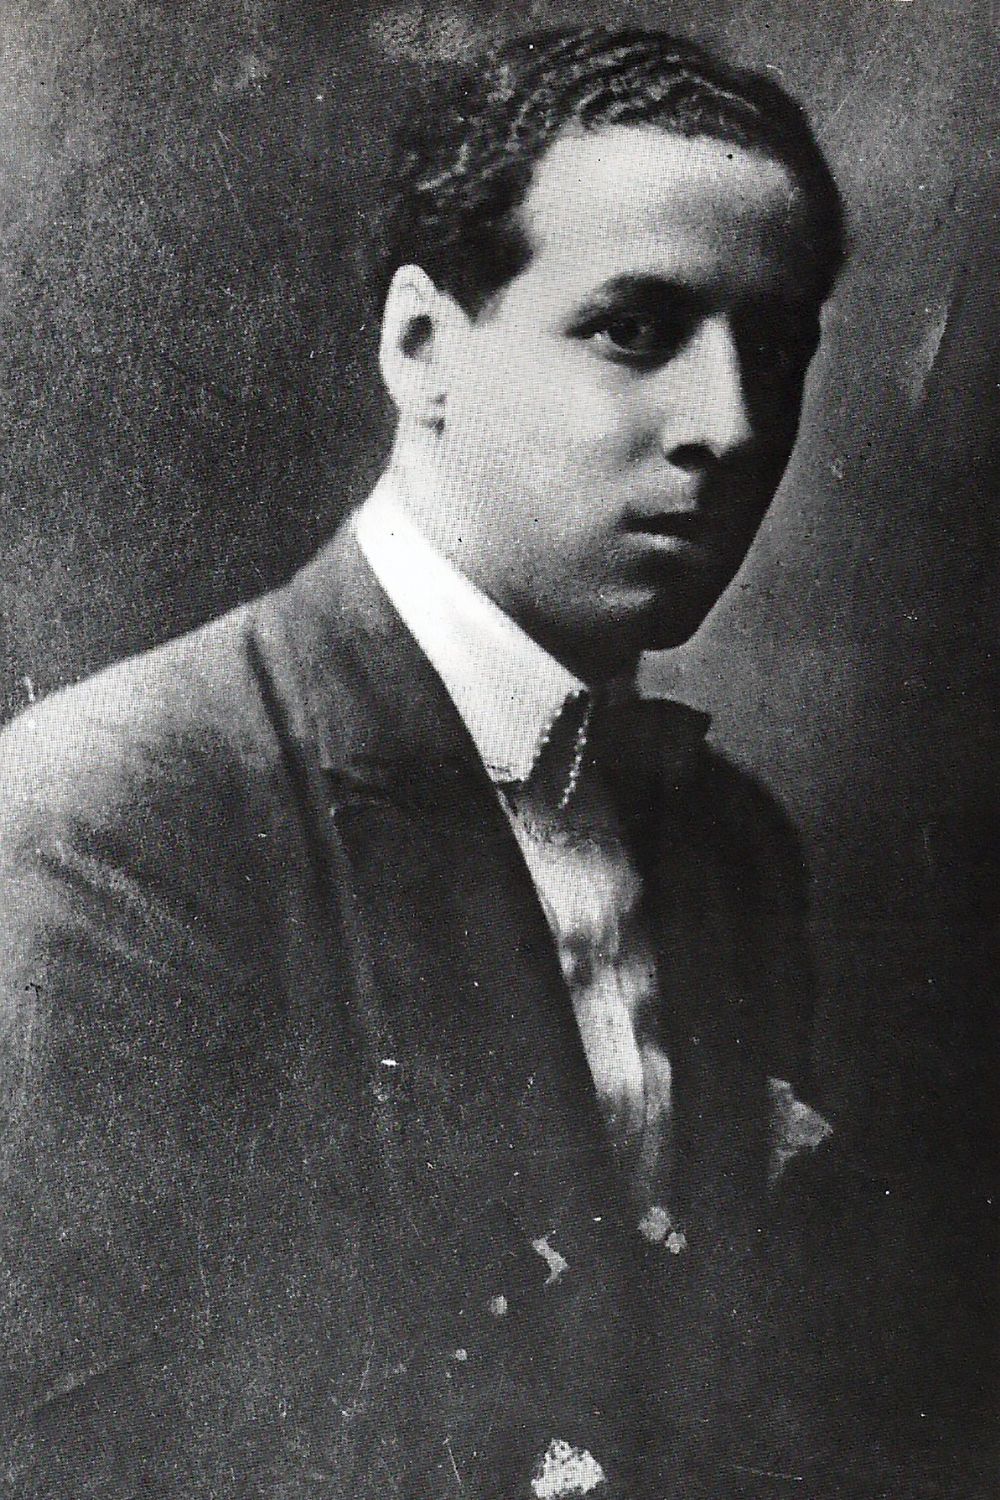 José Martínez, Argentine Tango musician and composer.